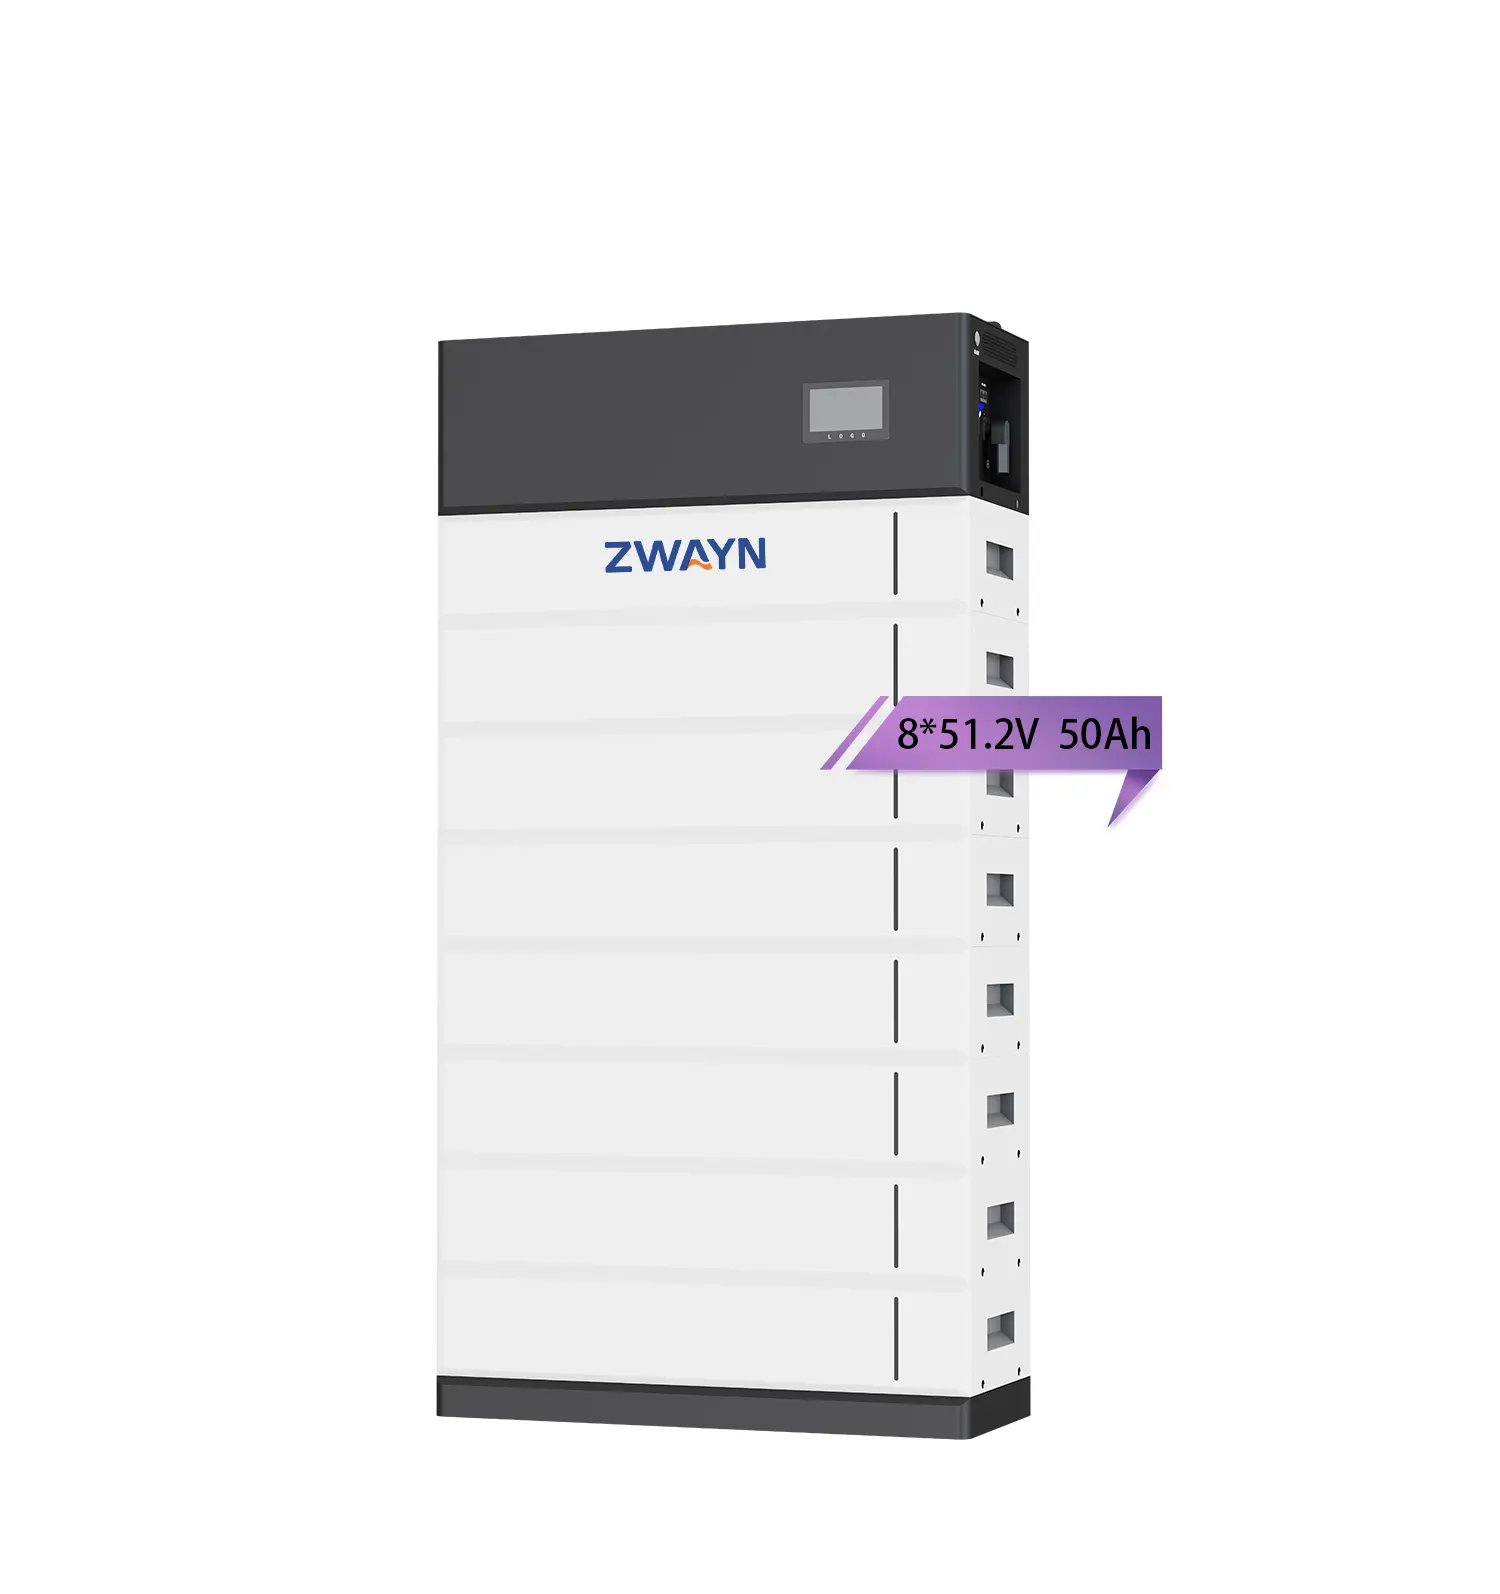 Zwayn stockage d'énergie 20KWH 10KWH batterie au lithium batterie empilée stockage d'énergie solaire batterie haute tension